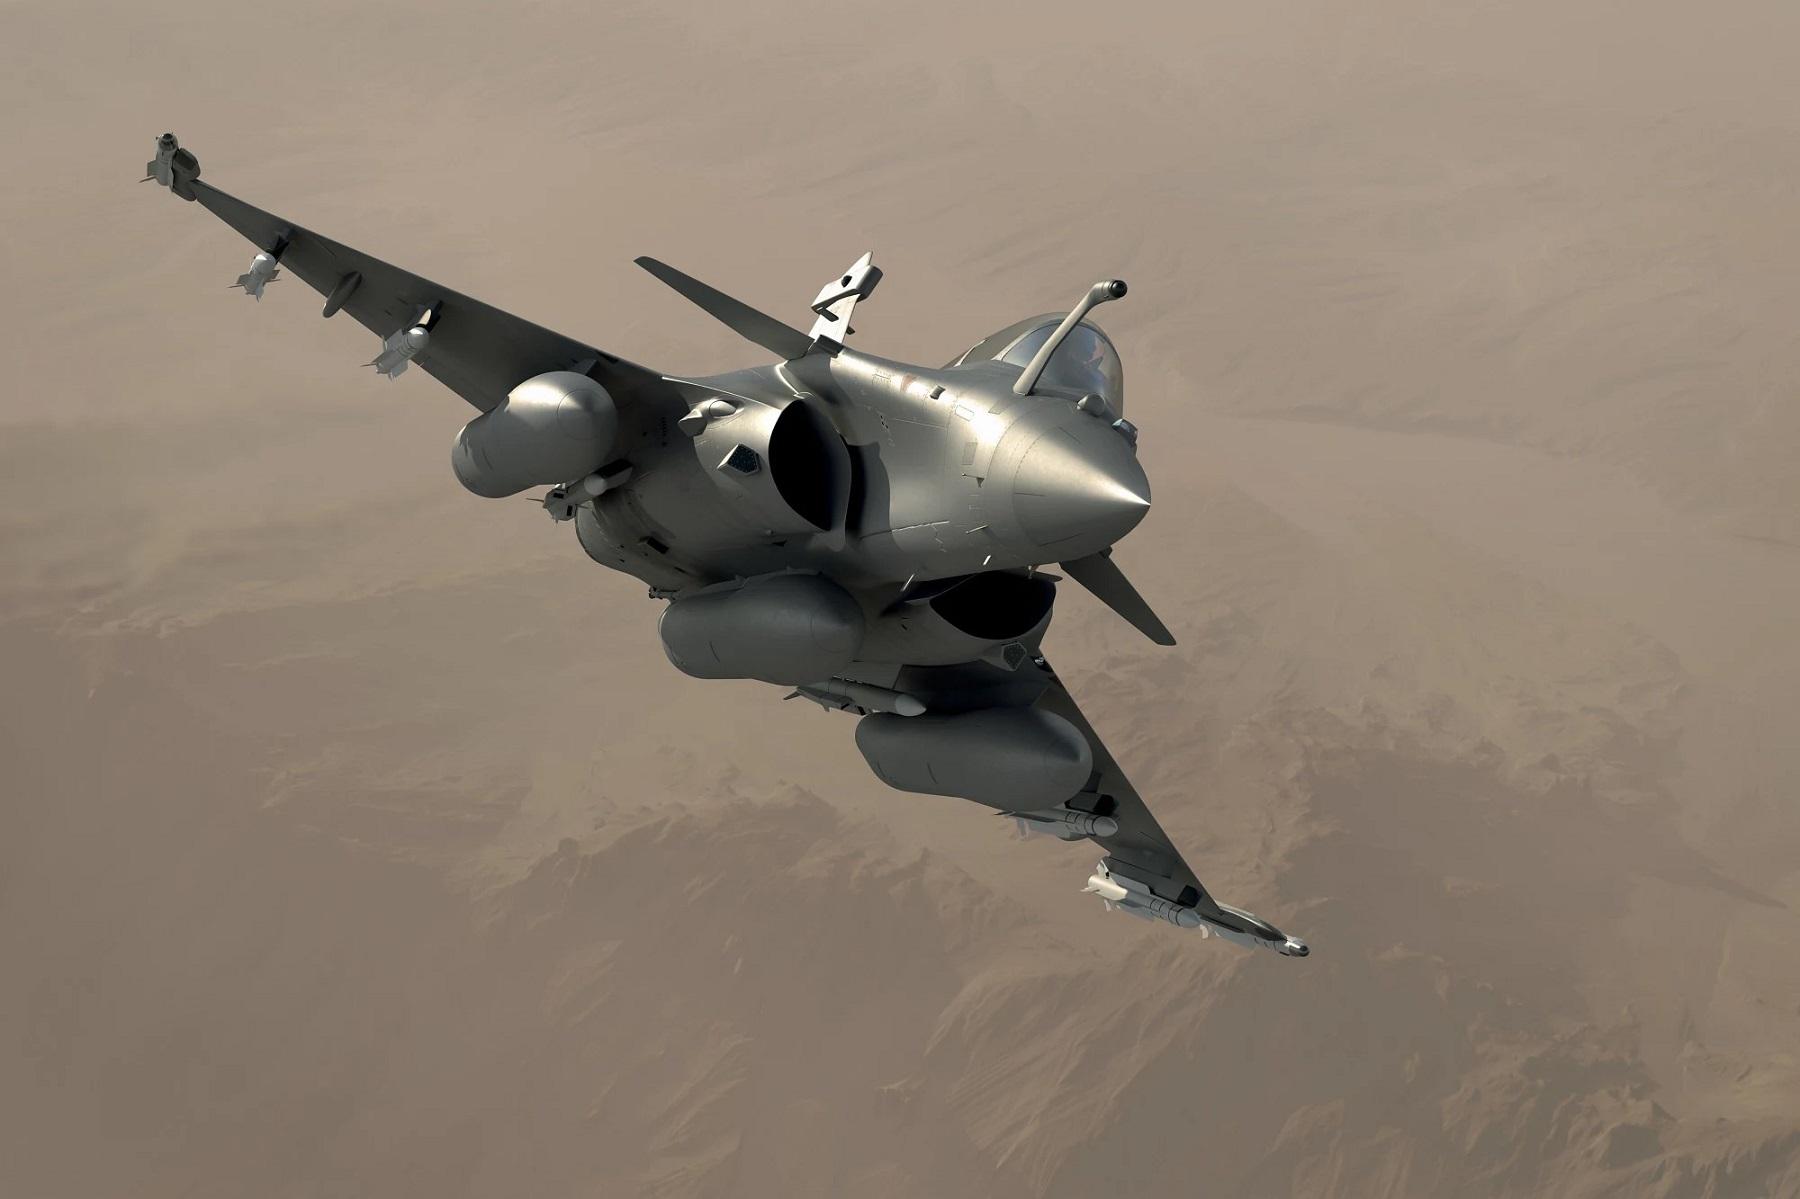 Dassault Rafale twin-engine, canard delta wing, multirole fighter aircraft